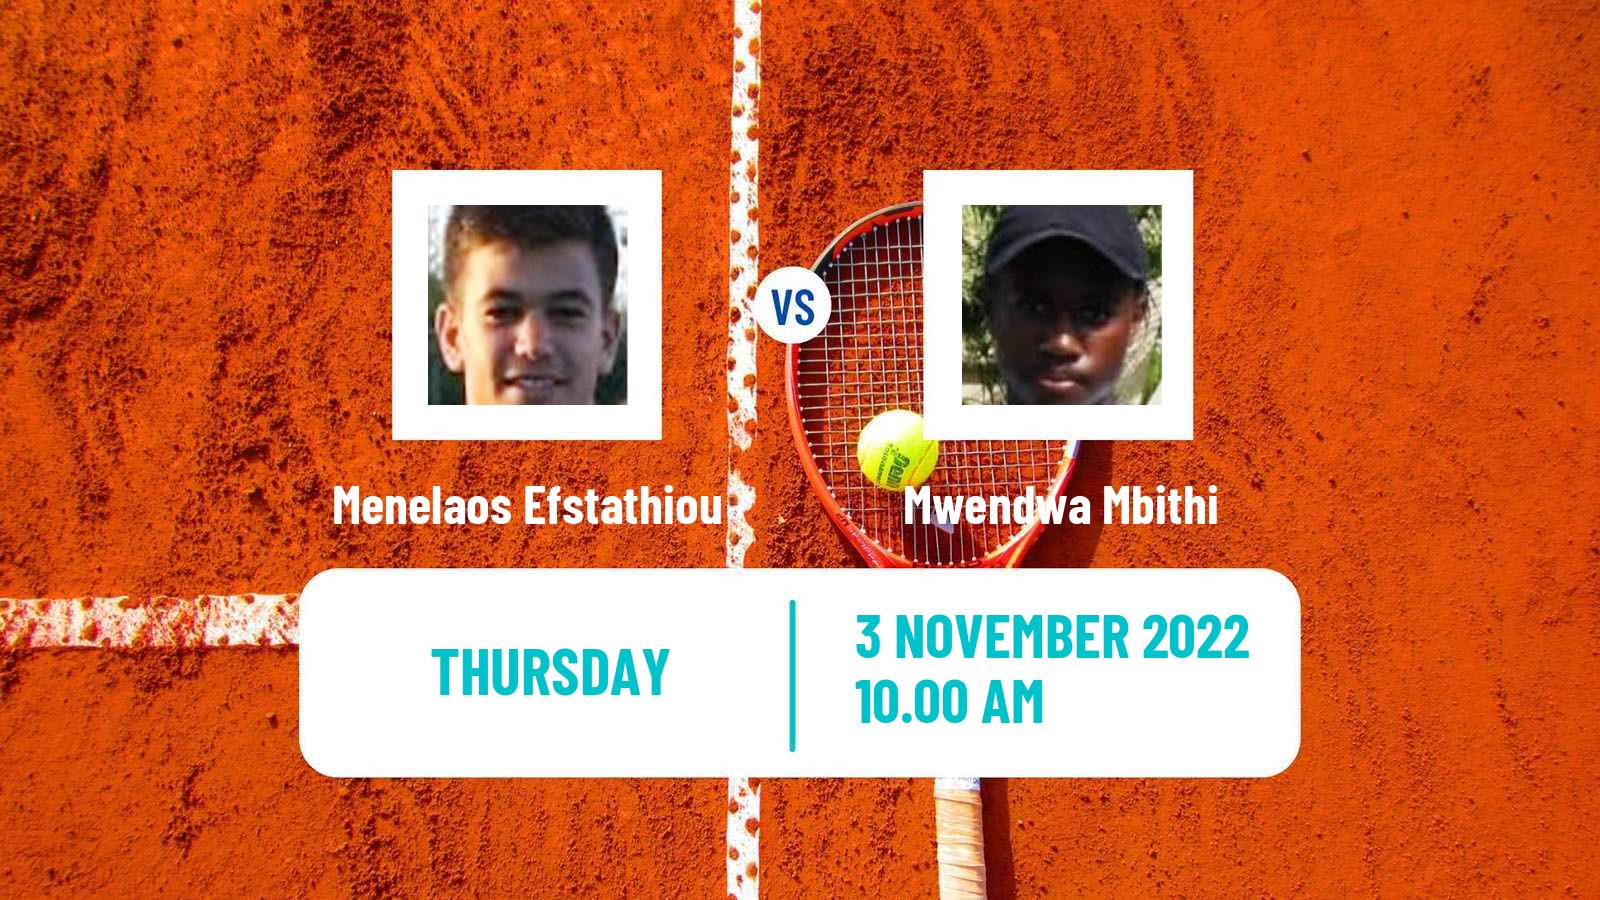 Tennis ITF Tournaments Menelaos Efstathiou - Mwendwa Mbithi